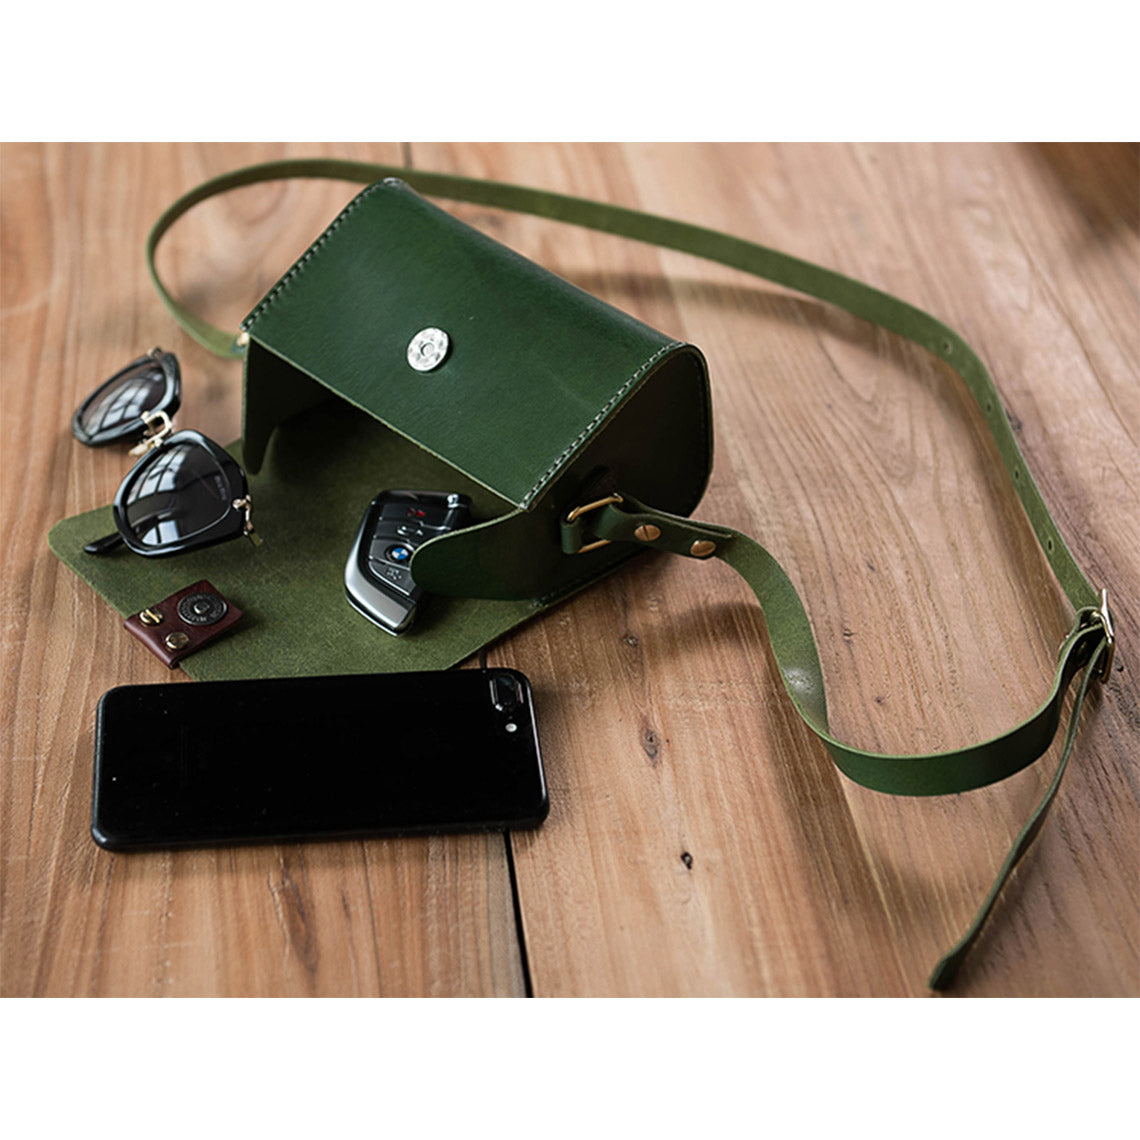 Leather crossbody bag green | DIY handmade gift ideas for birthday, Christmas